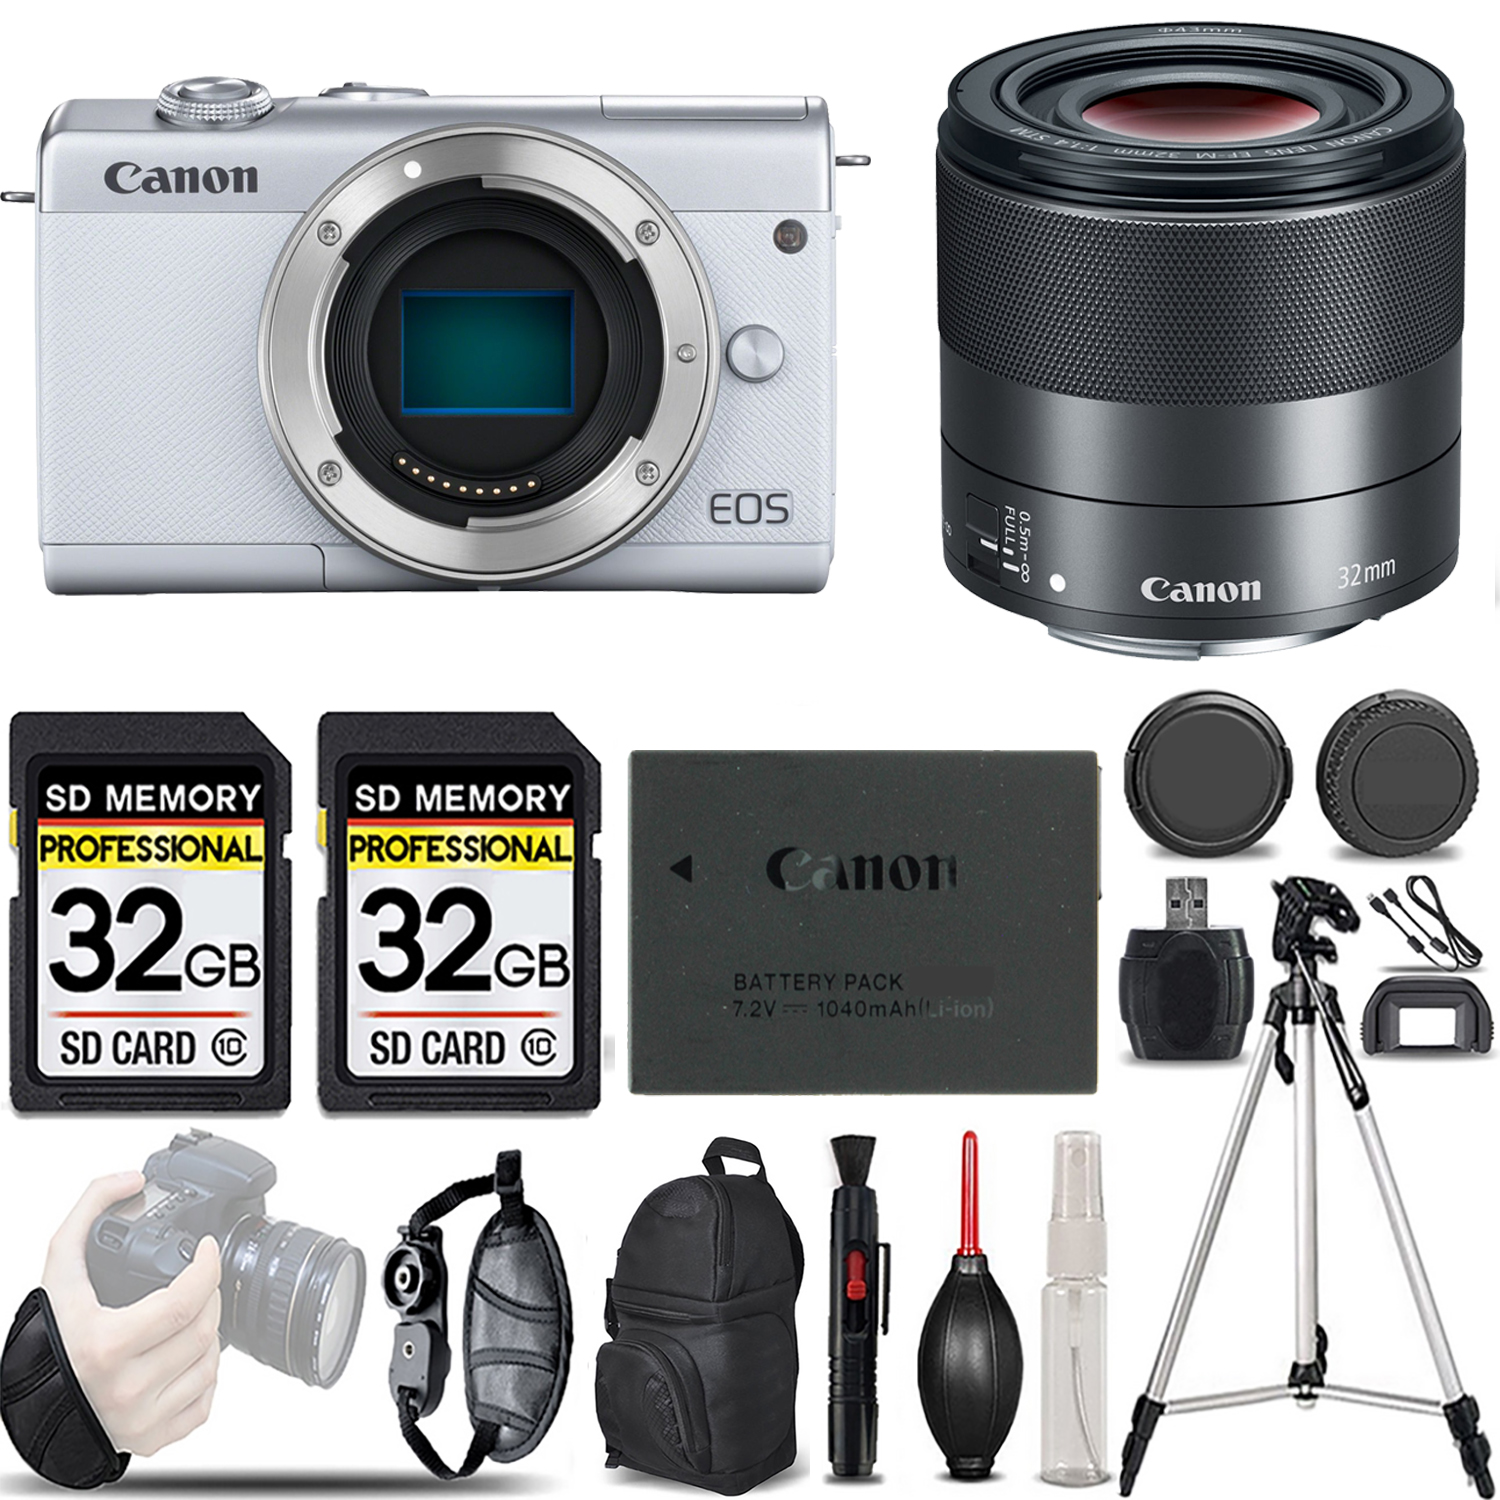 EOS M200  Camera (White) + 32mm f/1.4 STM Lens - LOADED KIT *FREE SHIPPING*